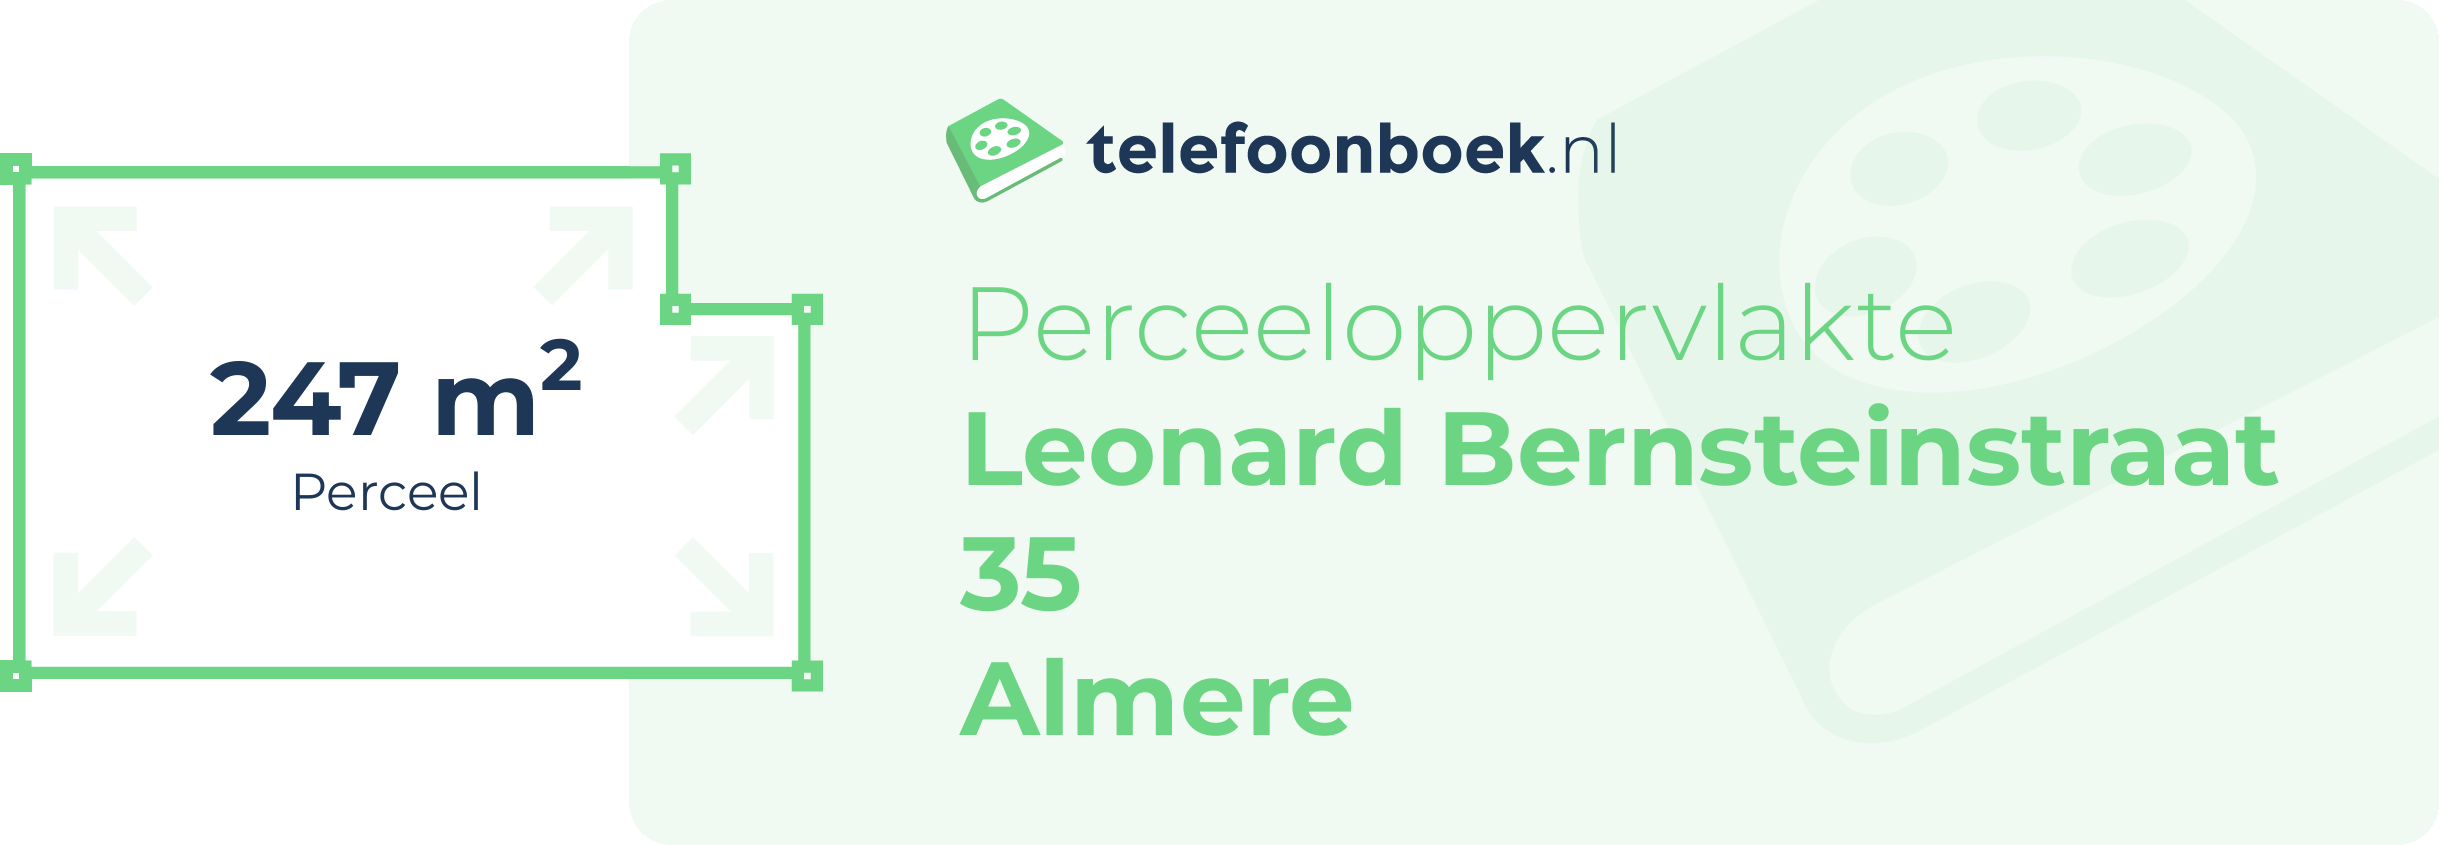 Perceeloppervlakte Leonard Bernsteinstraat 35 Almere